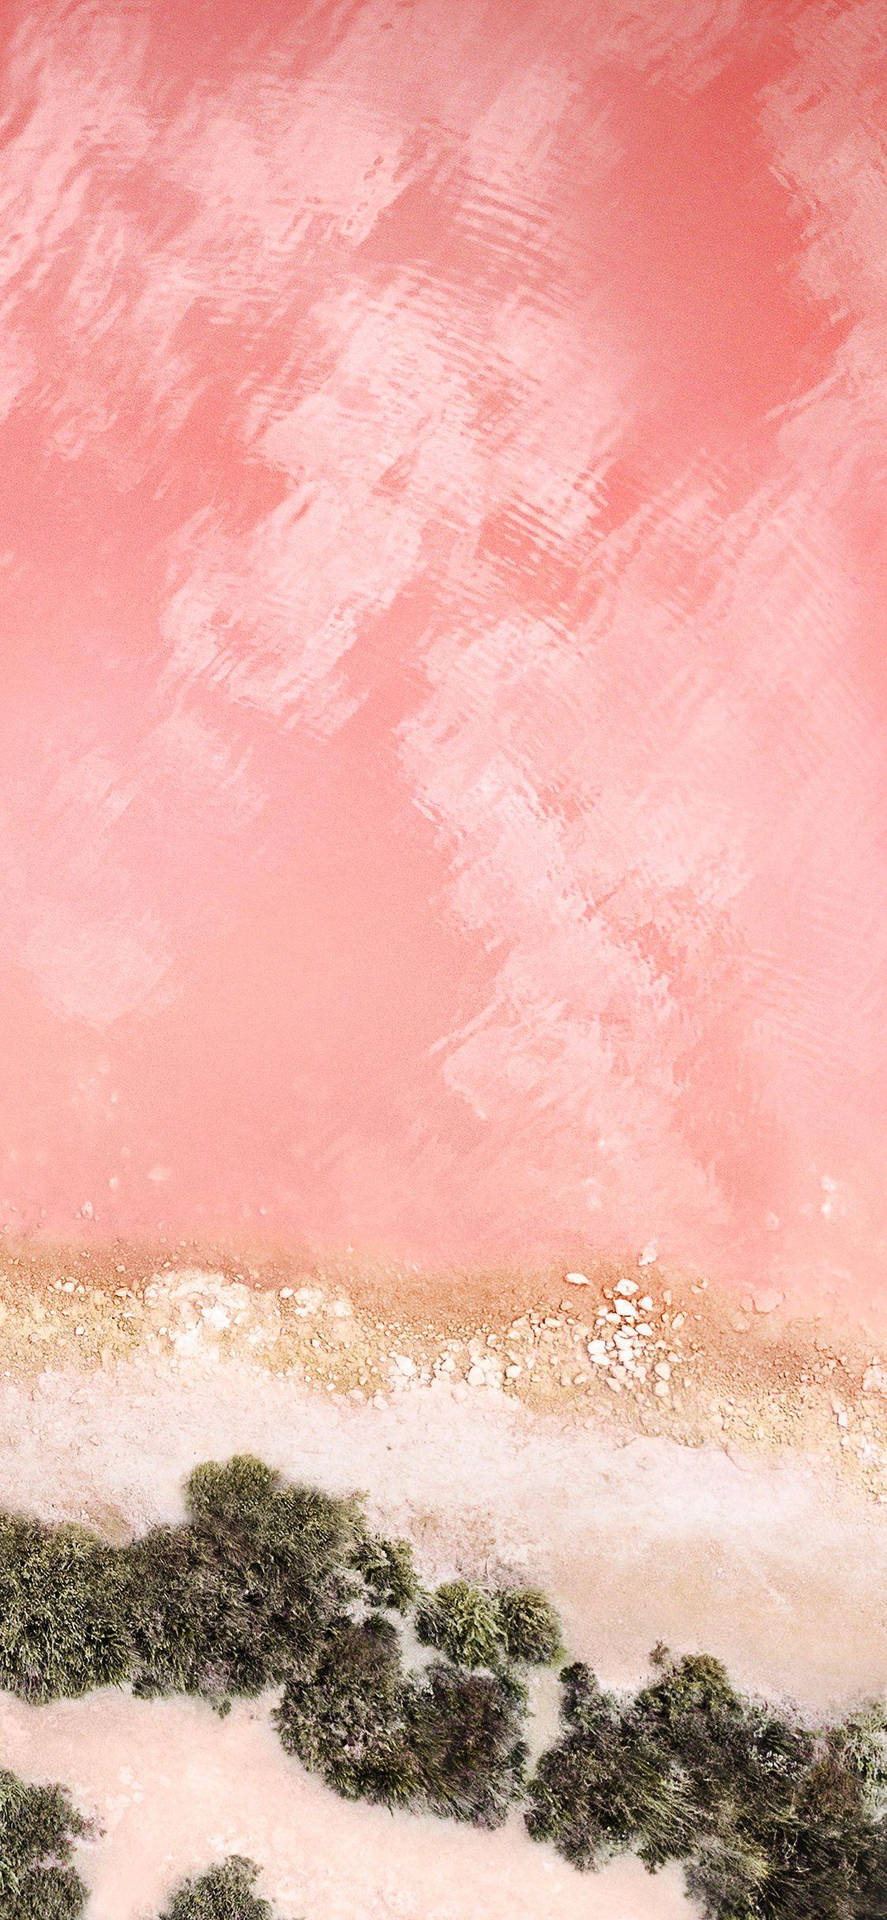 iPhone X Original Pink Water Wallpaper